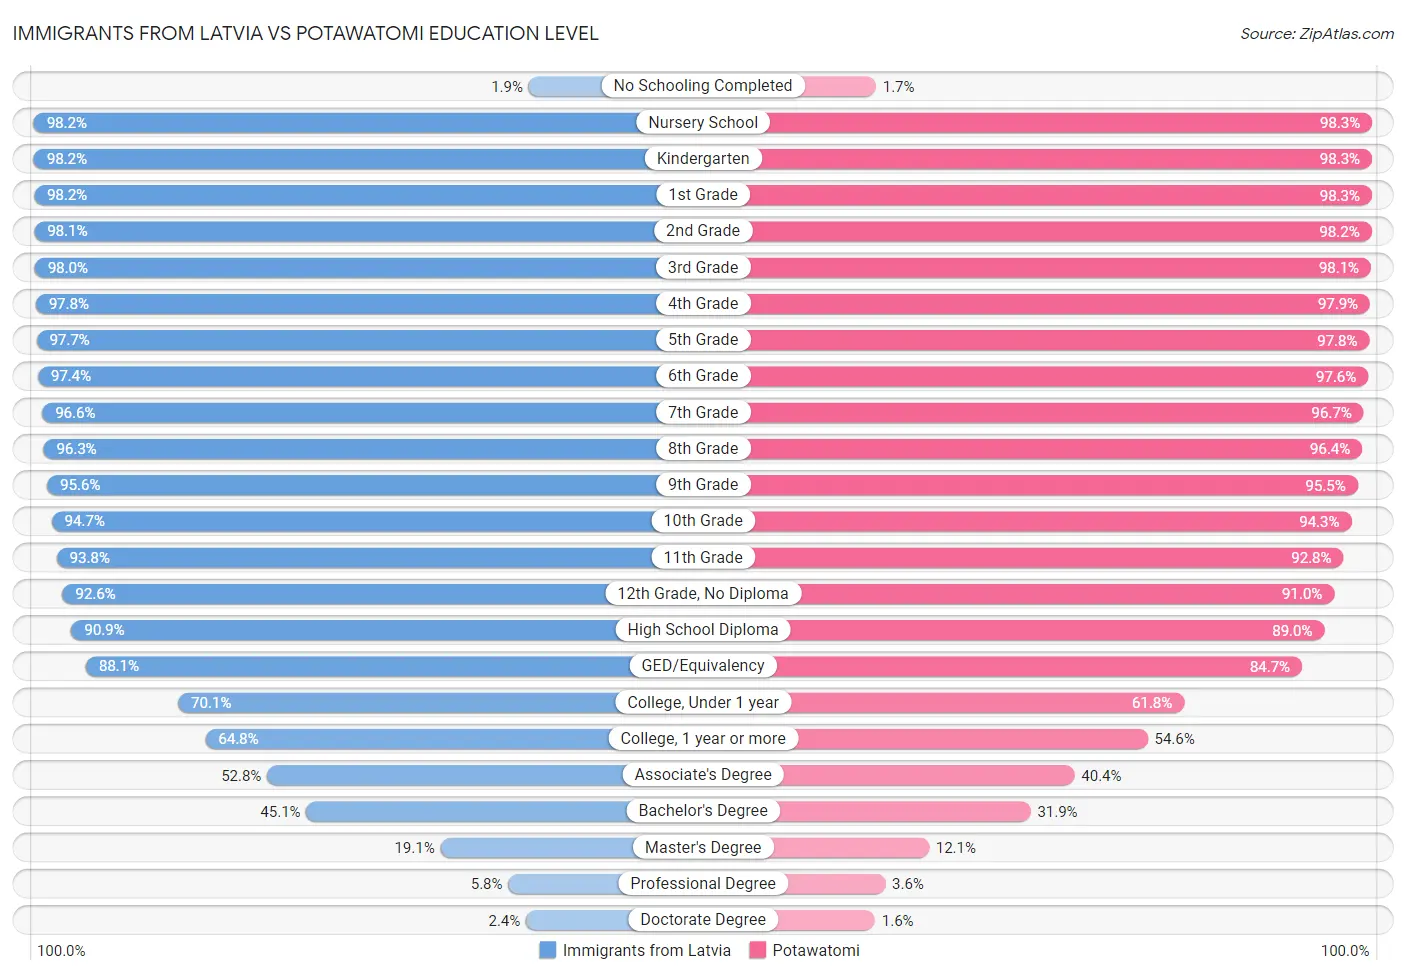 Immigrants from Latvia vs Potawatomi Education Level